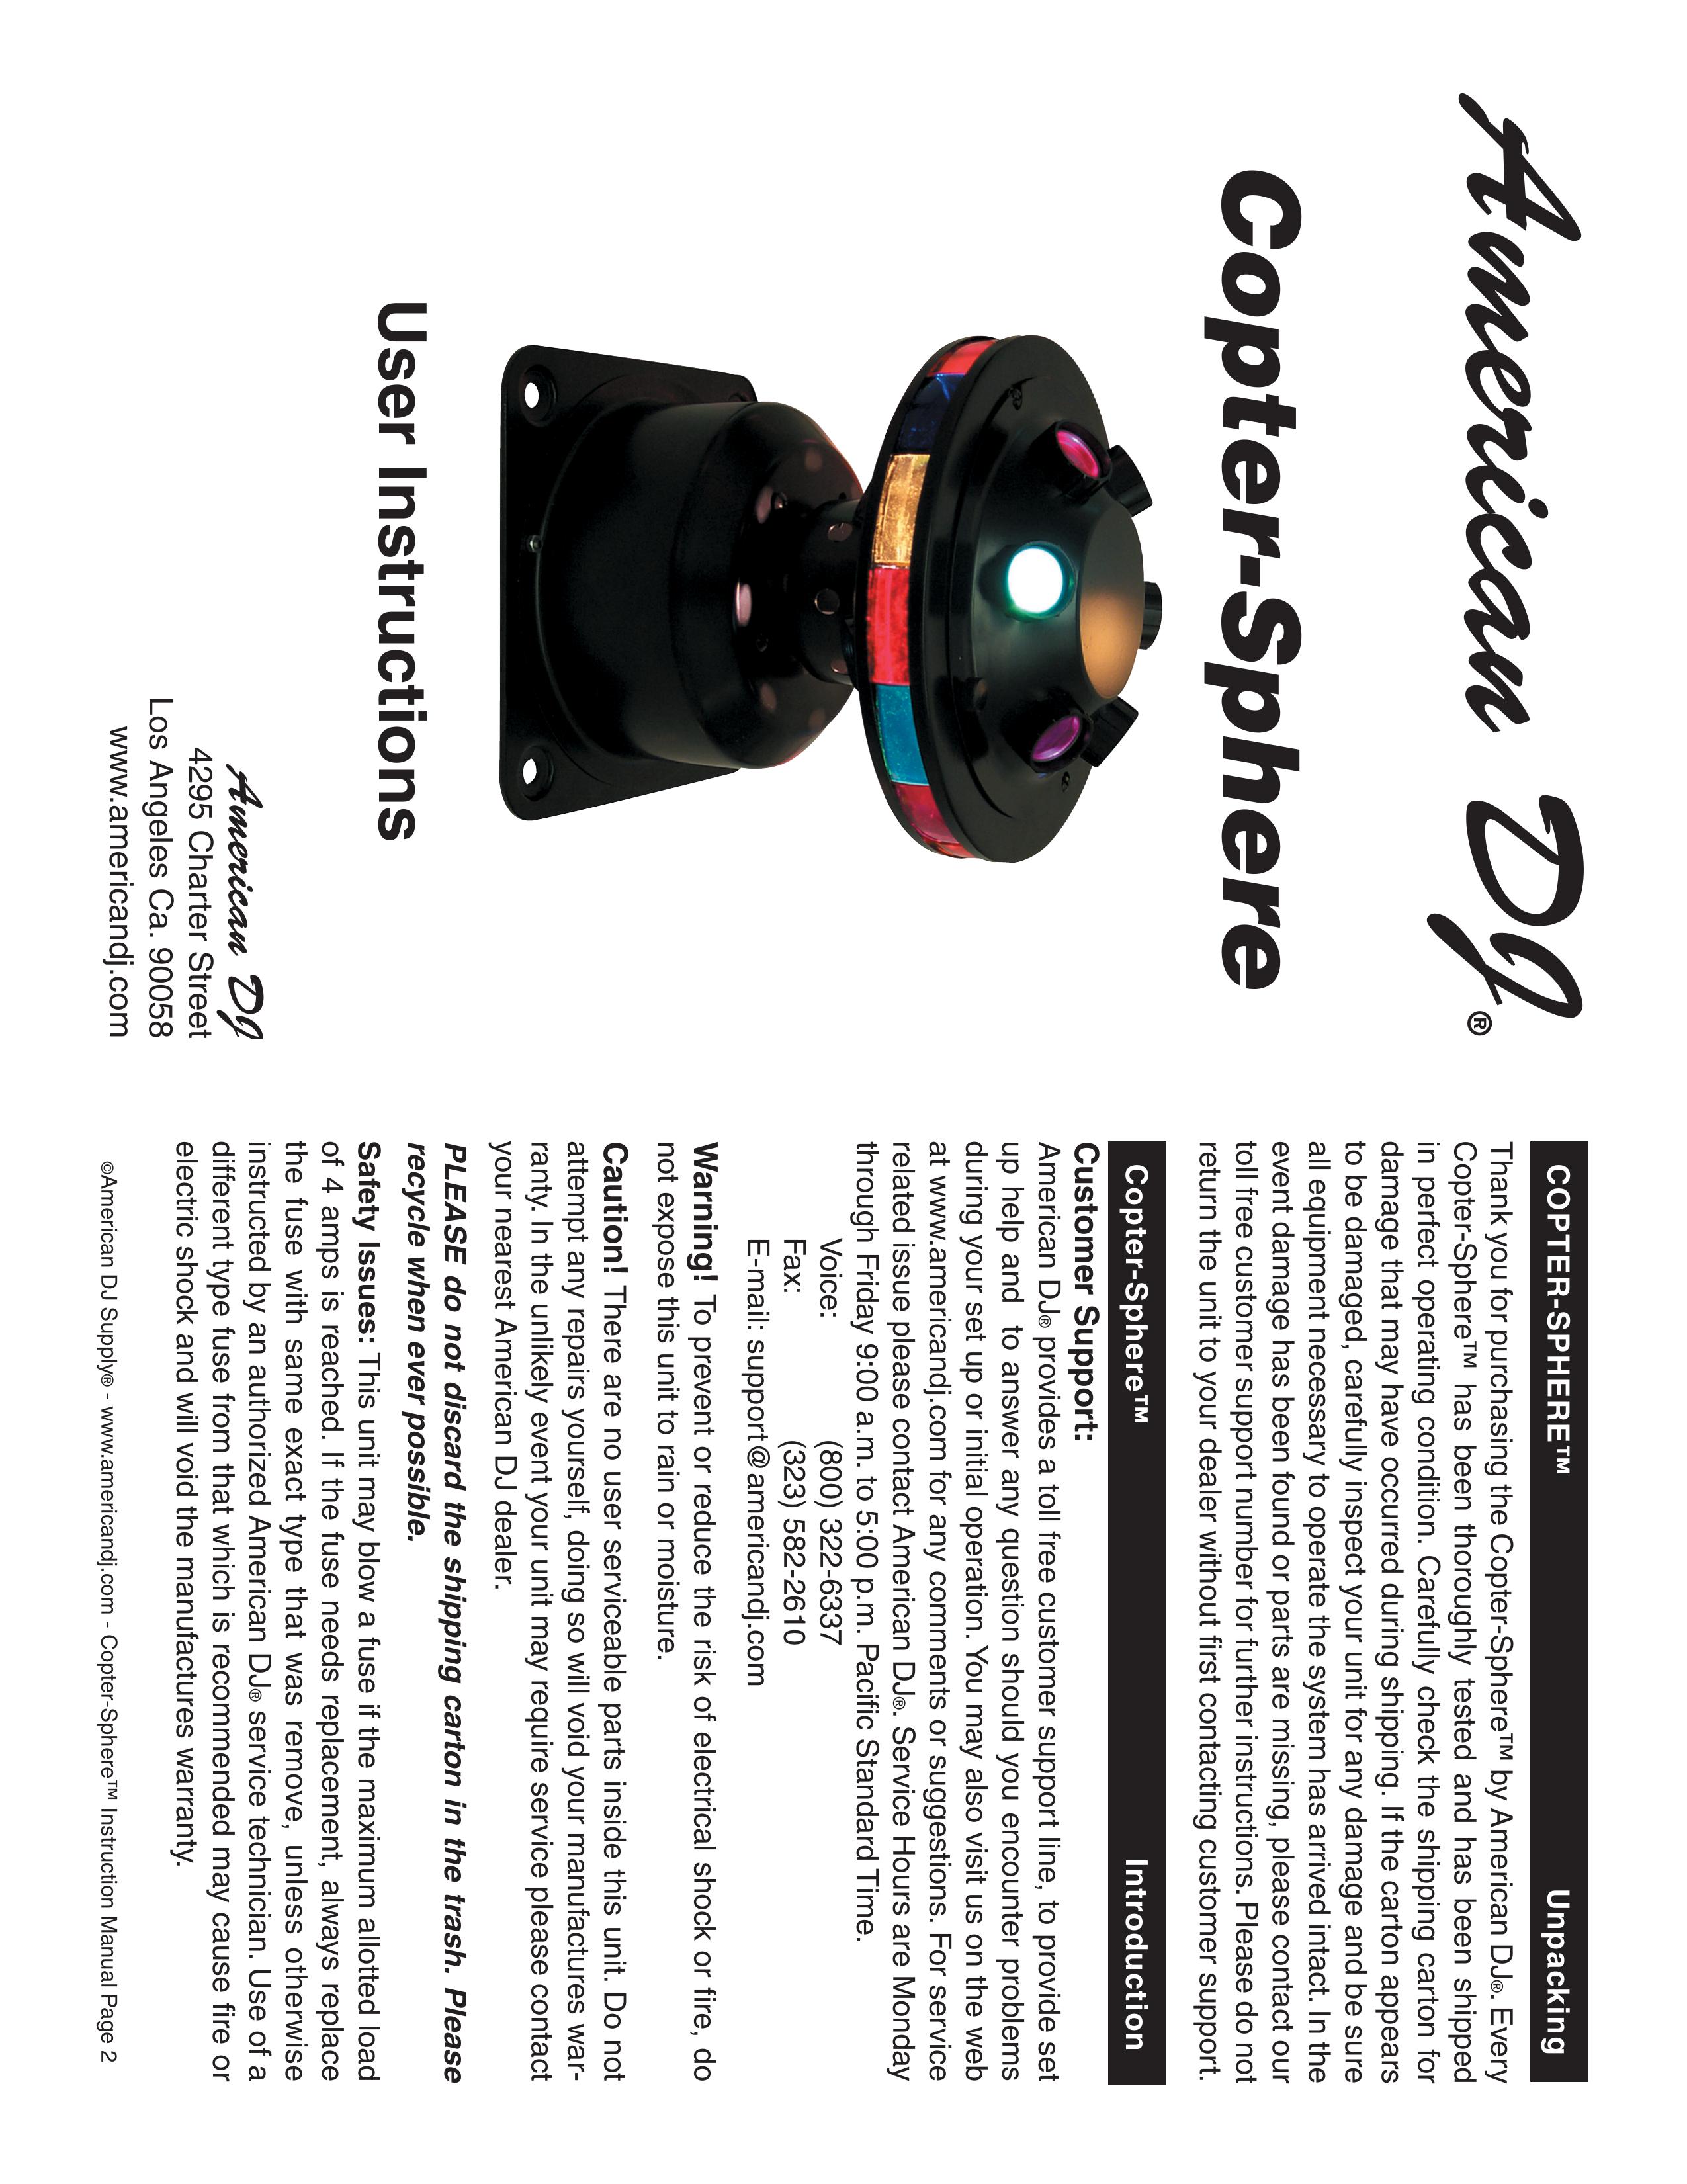 American DJ Copter-Sphere DJ Equipment User Manual